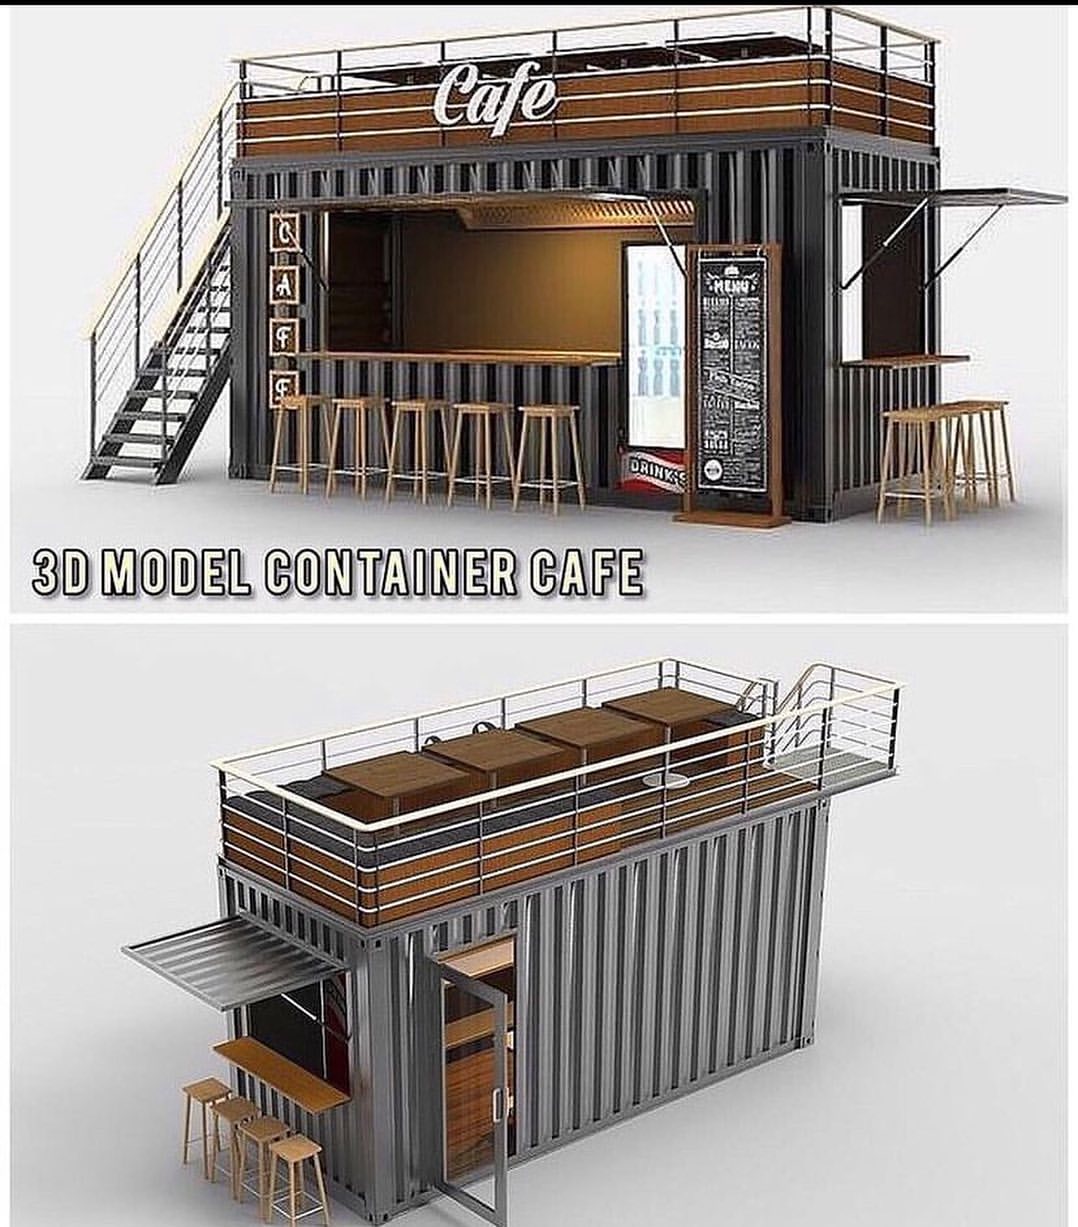 A beautiful container café.